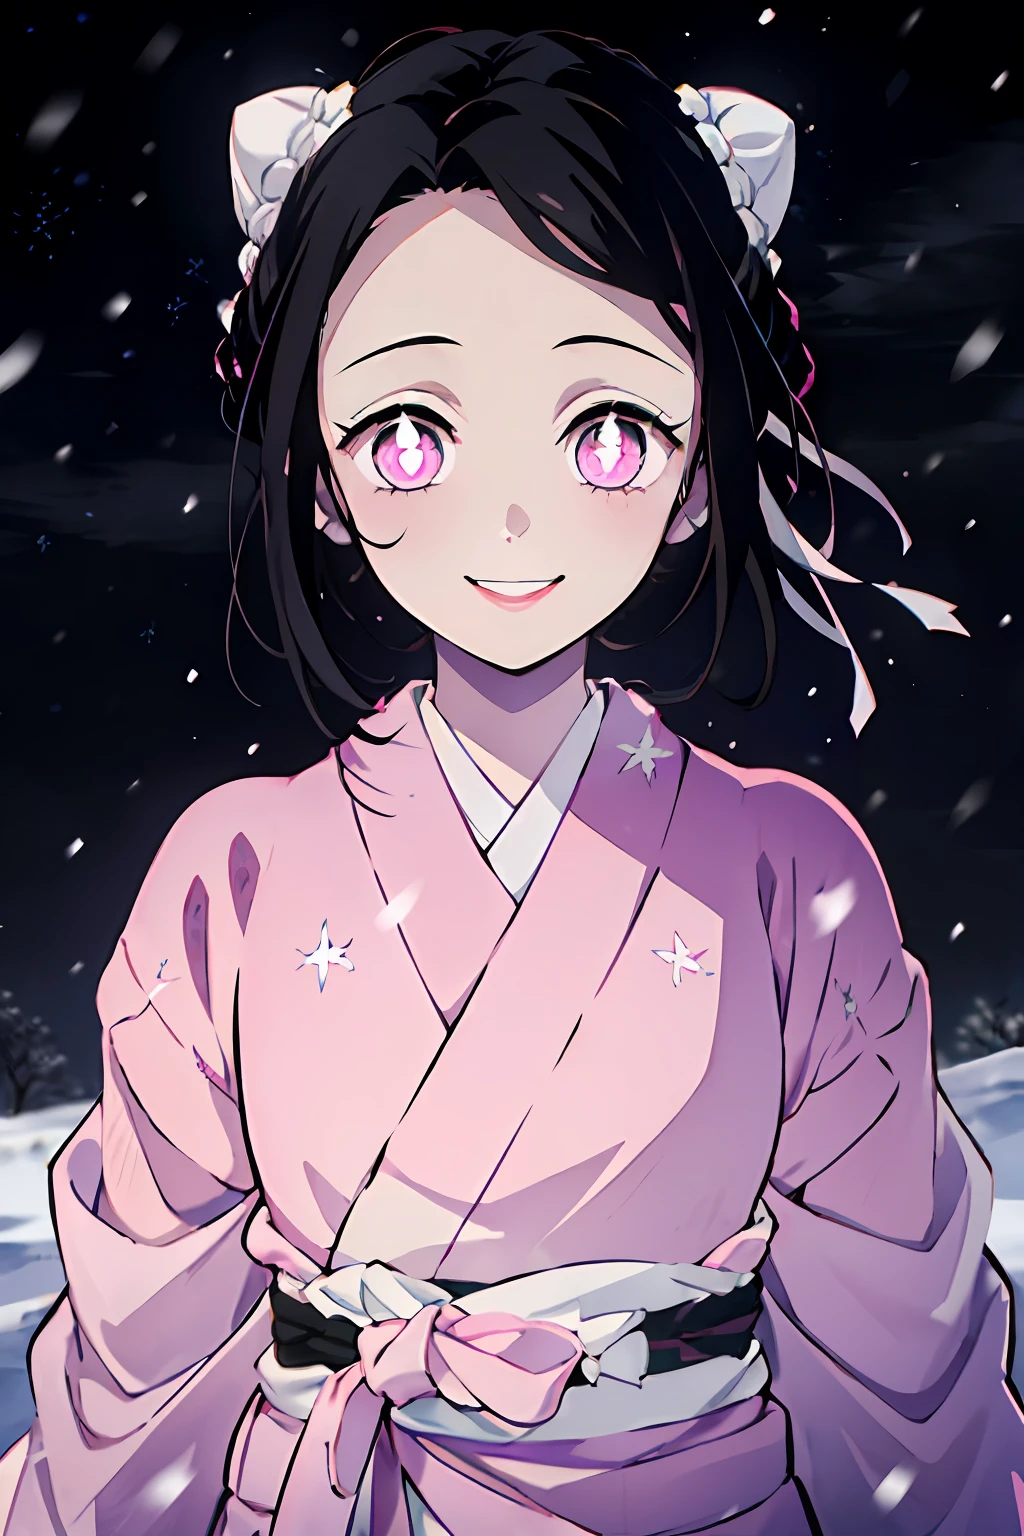 Kimetsu no Yaiba style, 1人の女の子, ソロ, 笑顔, ピンクの目, 花の形をした白い瞳孔, 黒髪, お団子に集まった髪, スタッドで固定,  ピンクの着物, 帯,  ((傑作)), ((の肖像画)), 雪が降る, ドリフト, 暗い空, 雪が降る